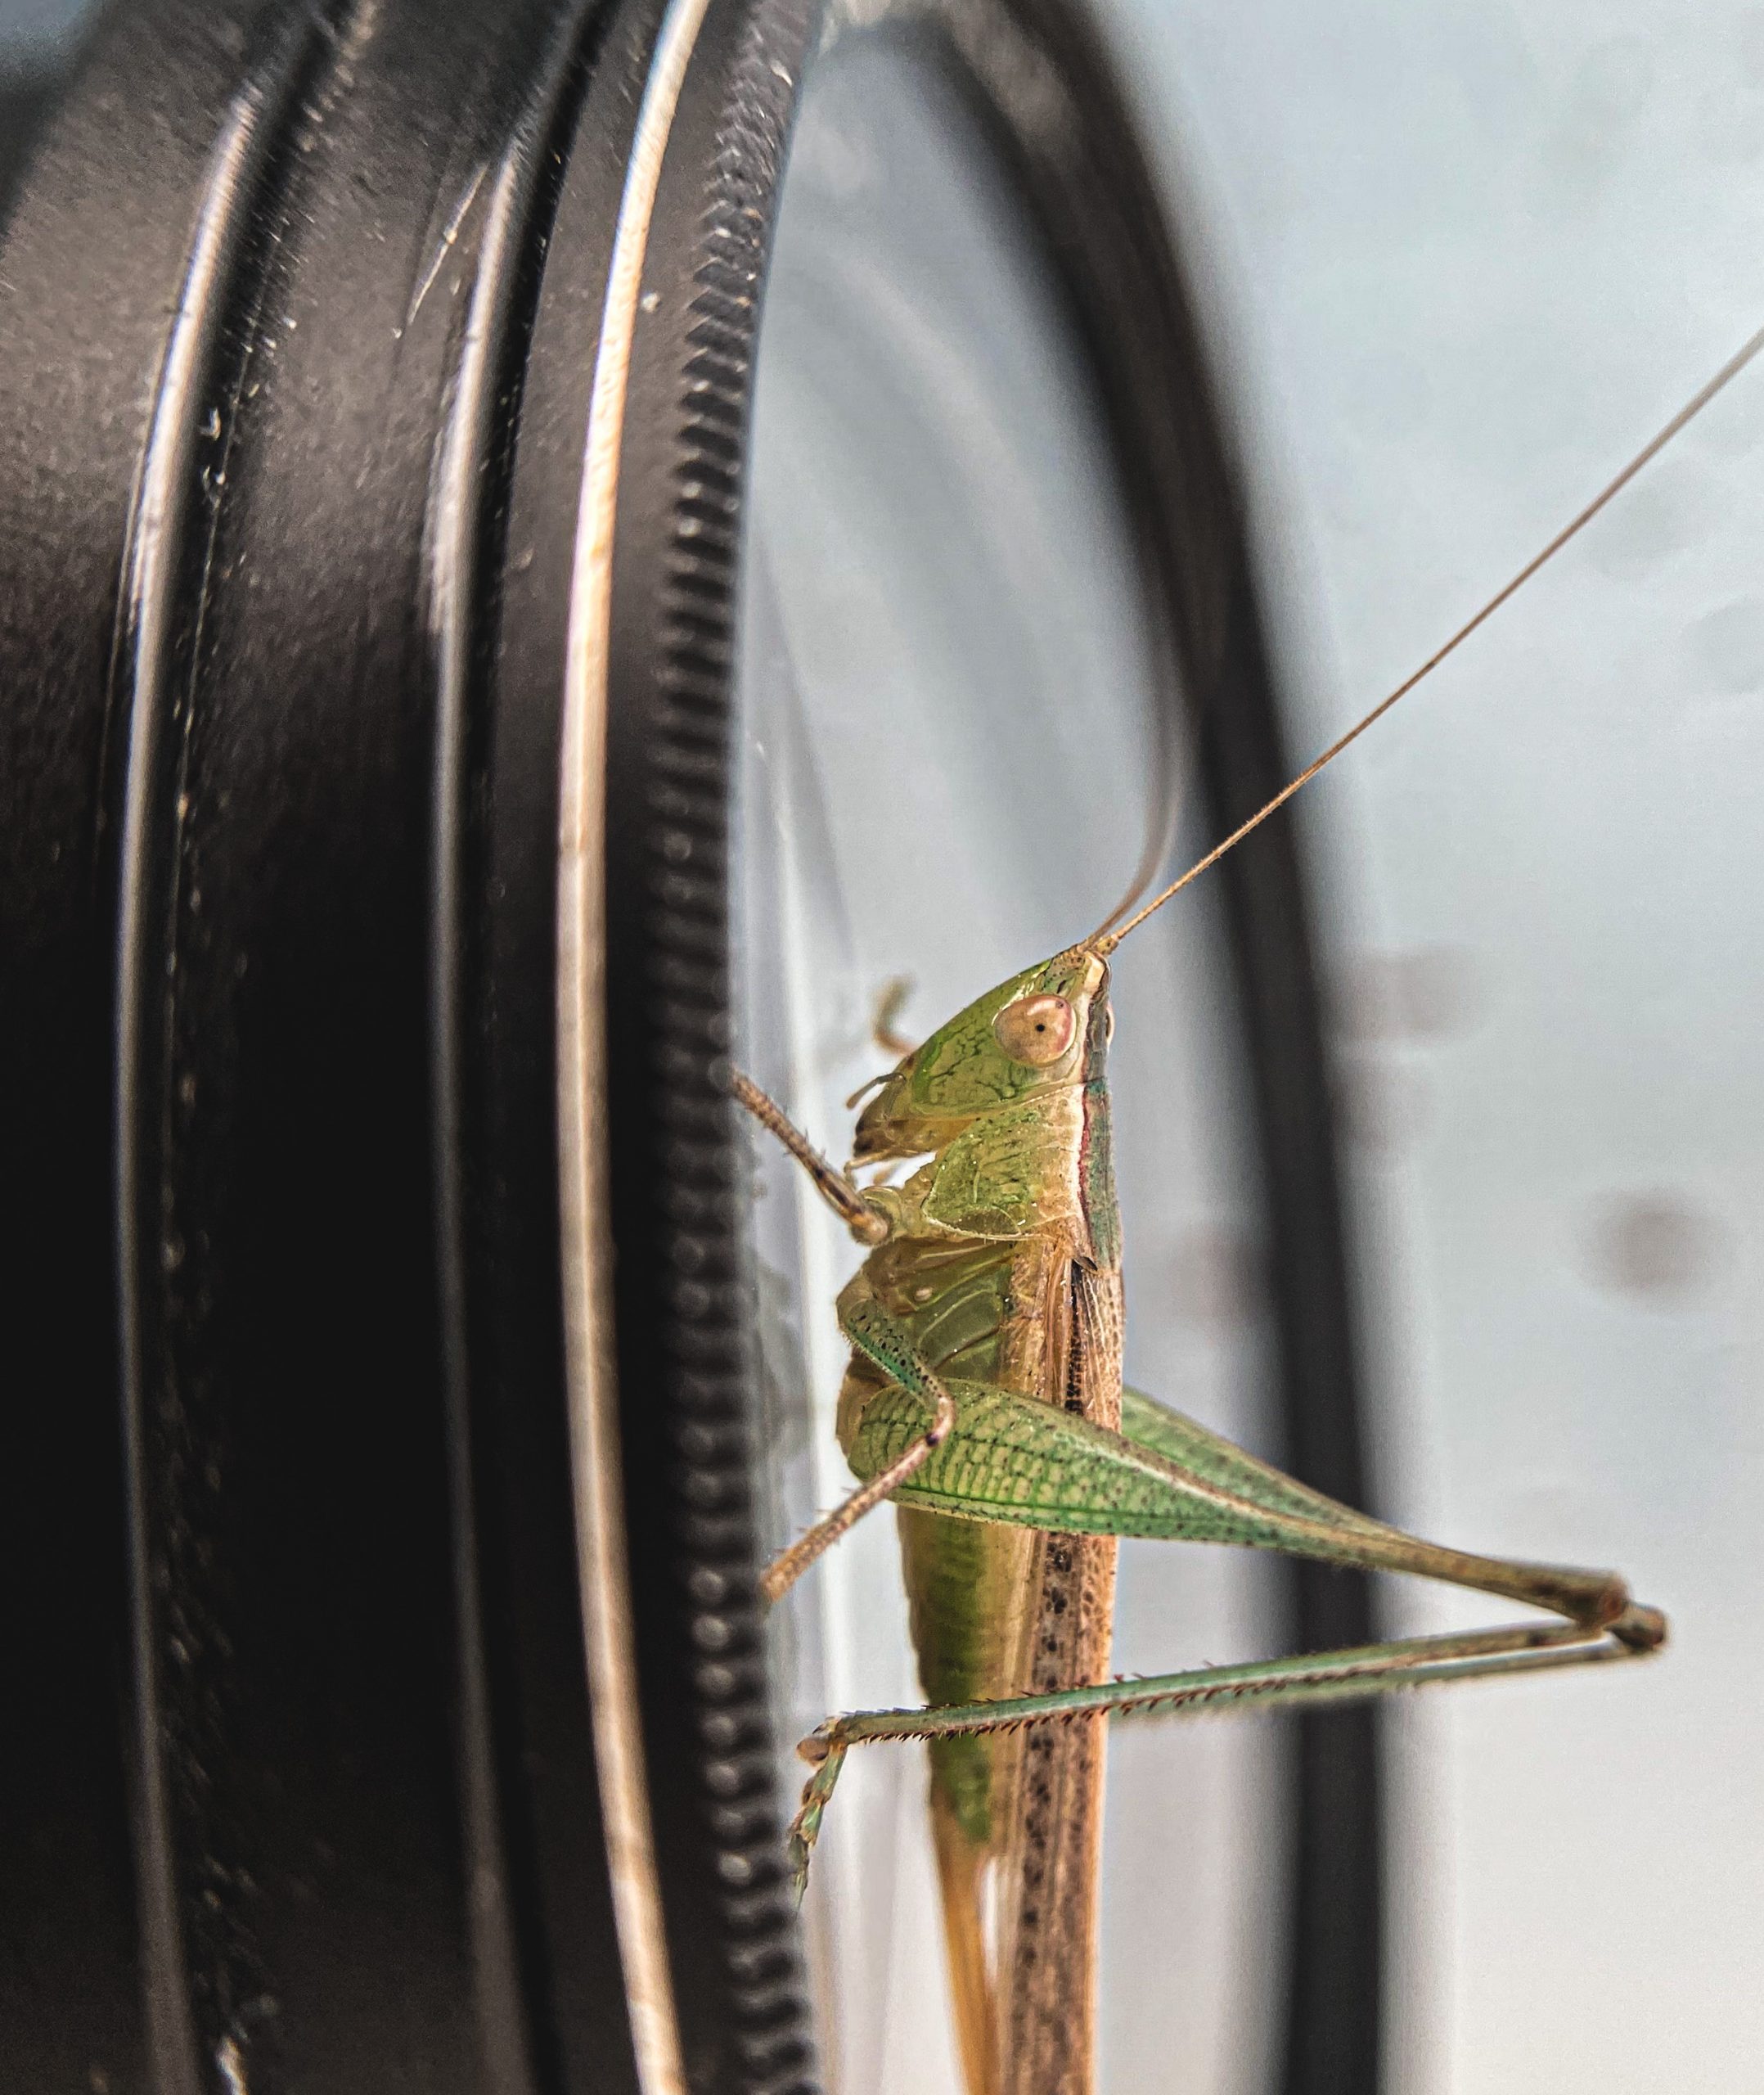 Grasshopper on a clock.